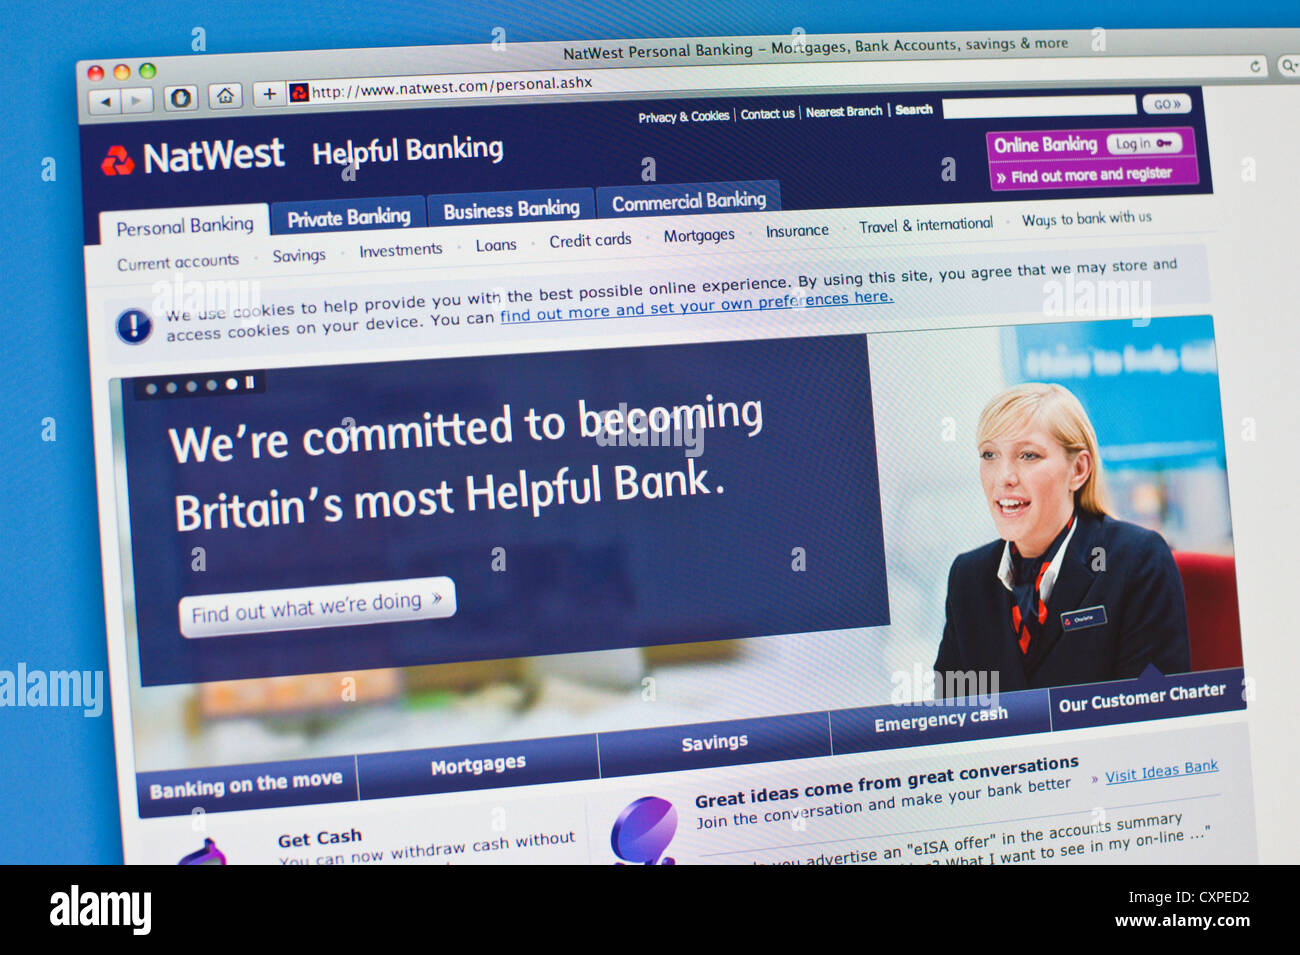 Online banking sito web della NatWest high street bank Foto Stock